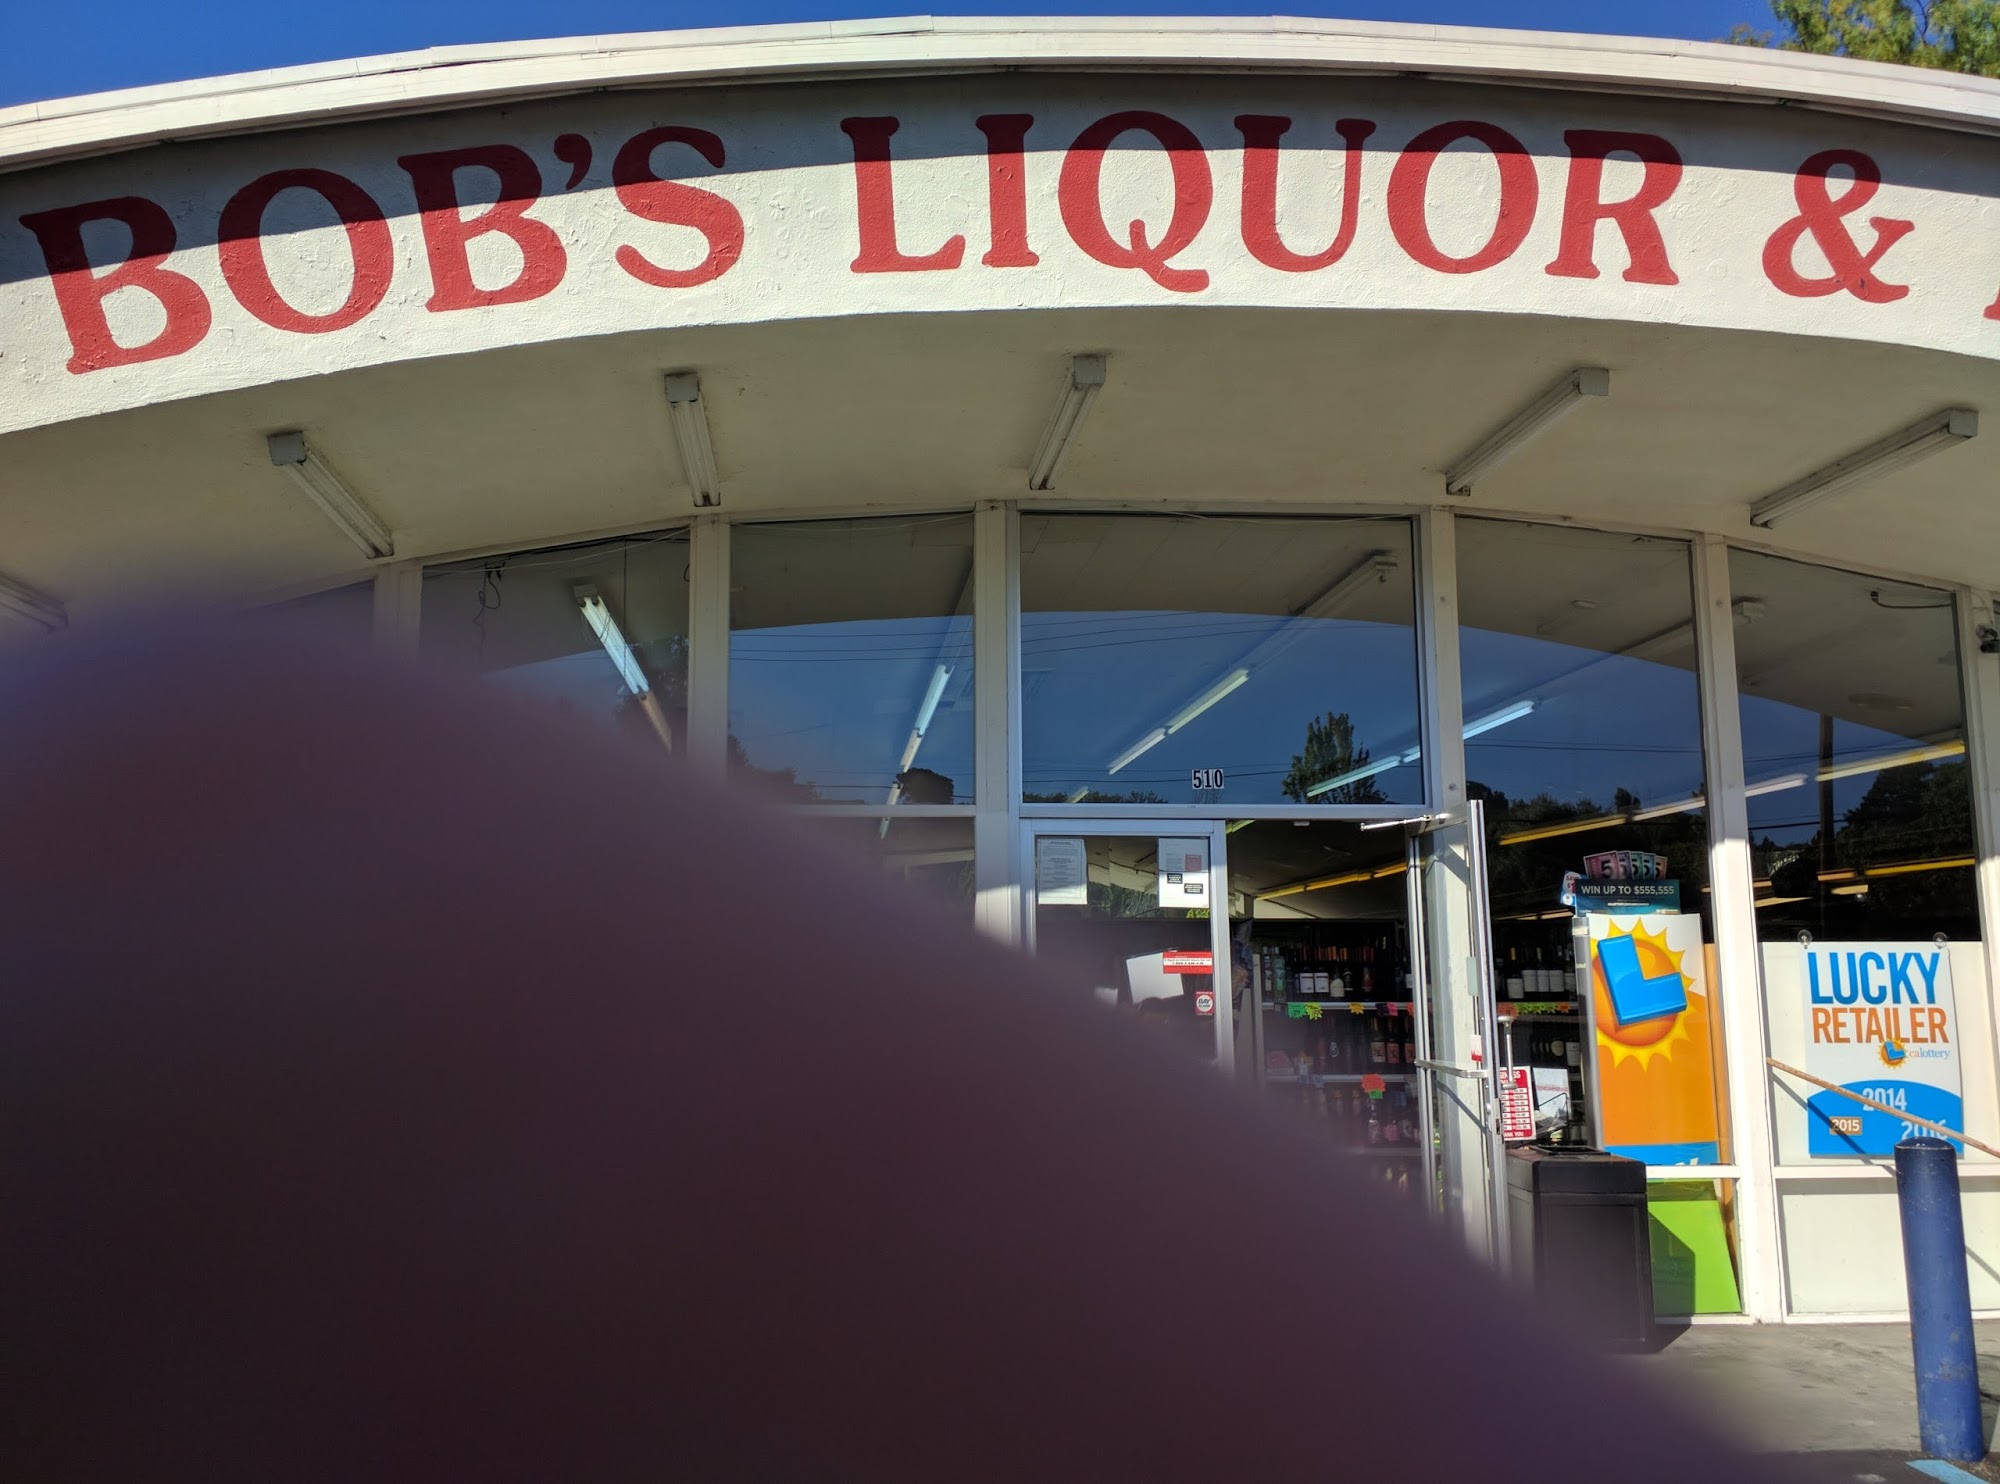 Bob's Liquor & Food